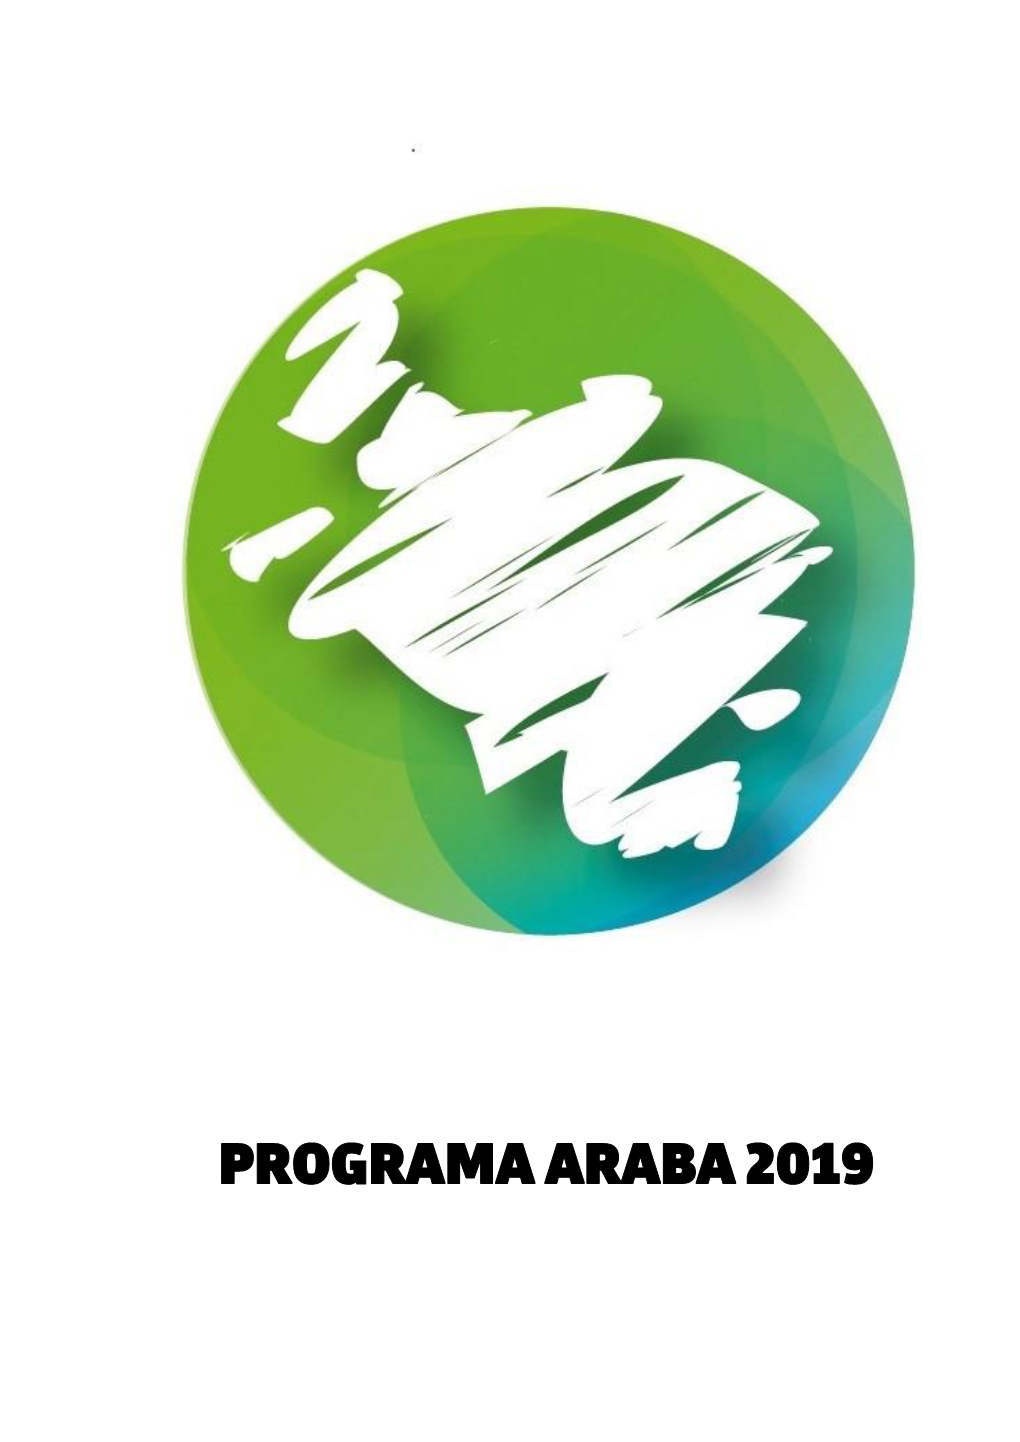 Programa Araba 2019 Programa Populara Araba Legislatura 2019-2023